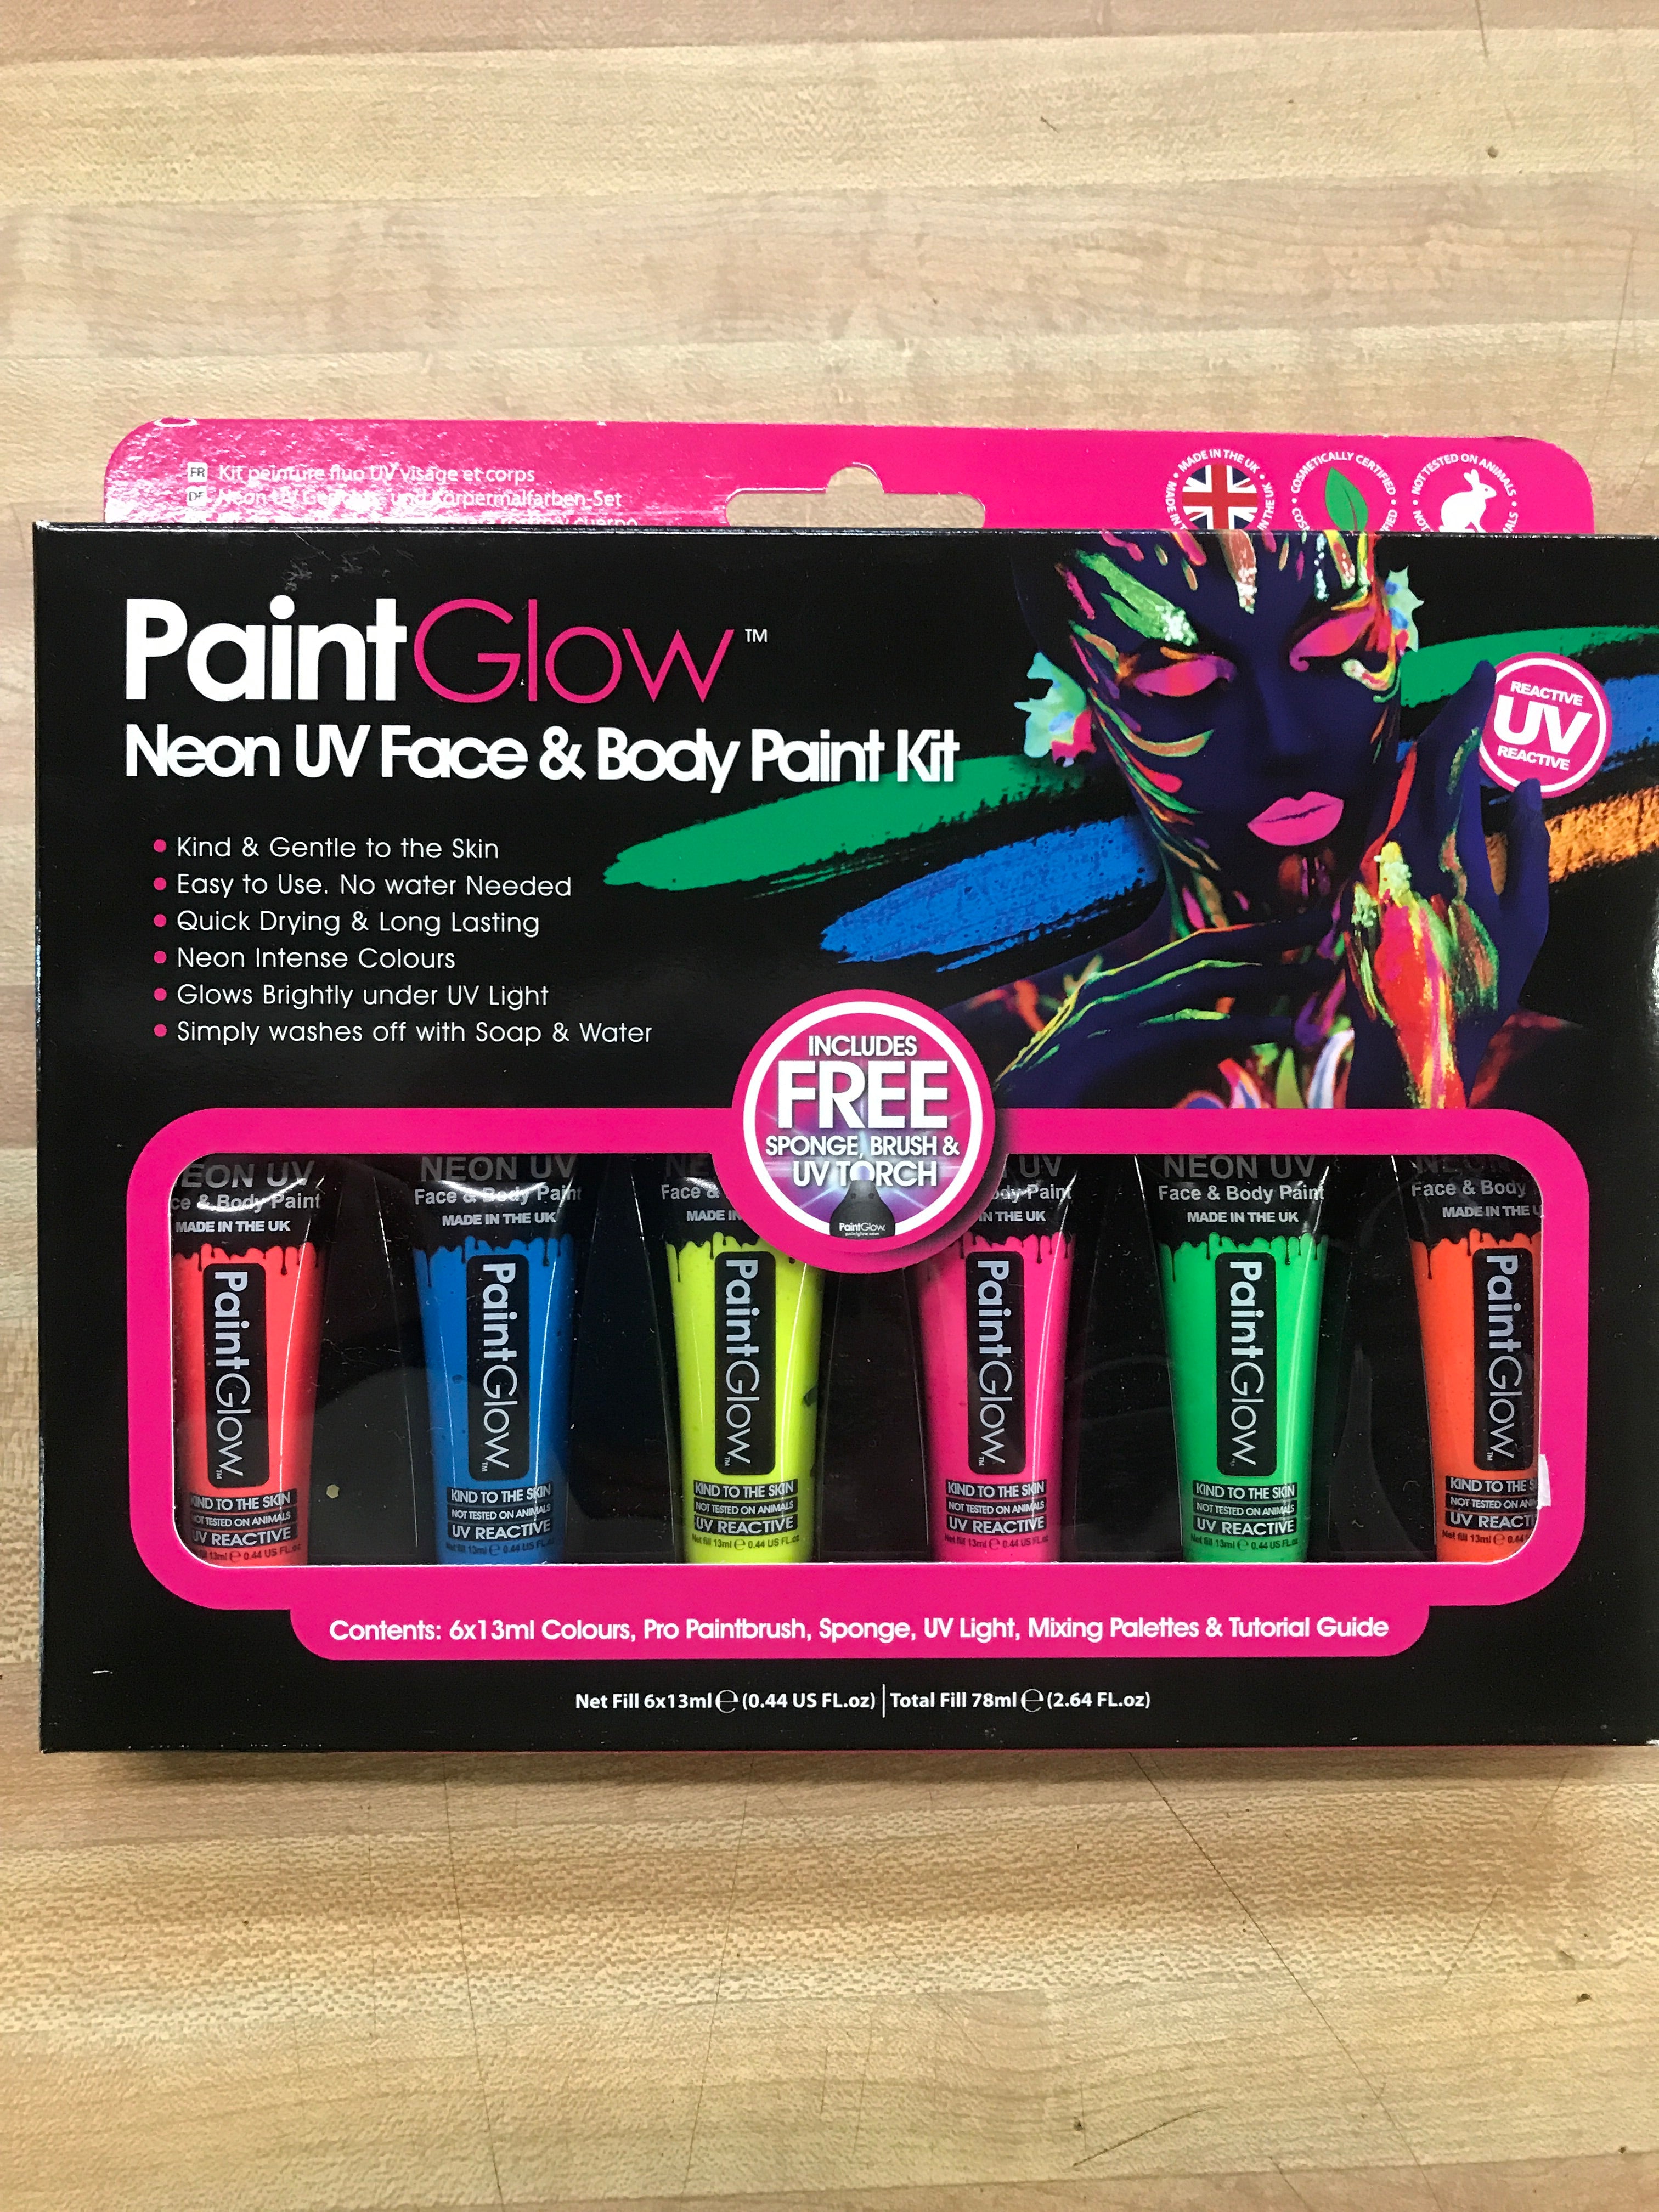 Paint Glow neon uv face & body paint kit